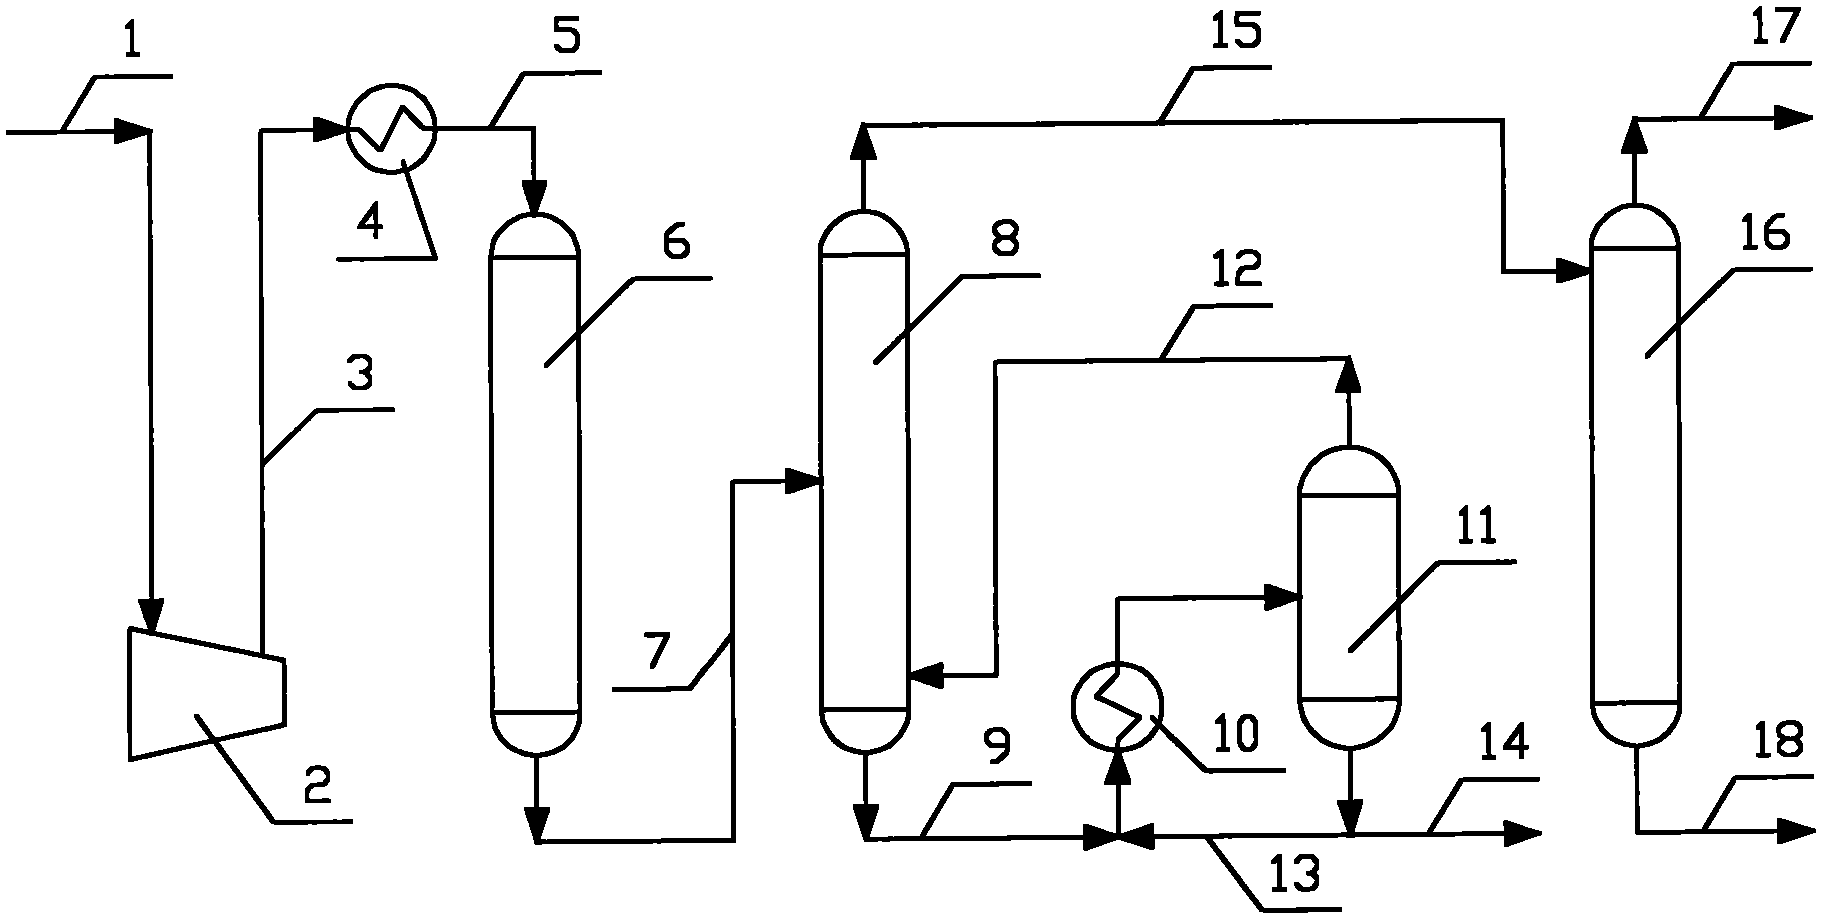 Ethylene separation method